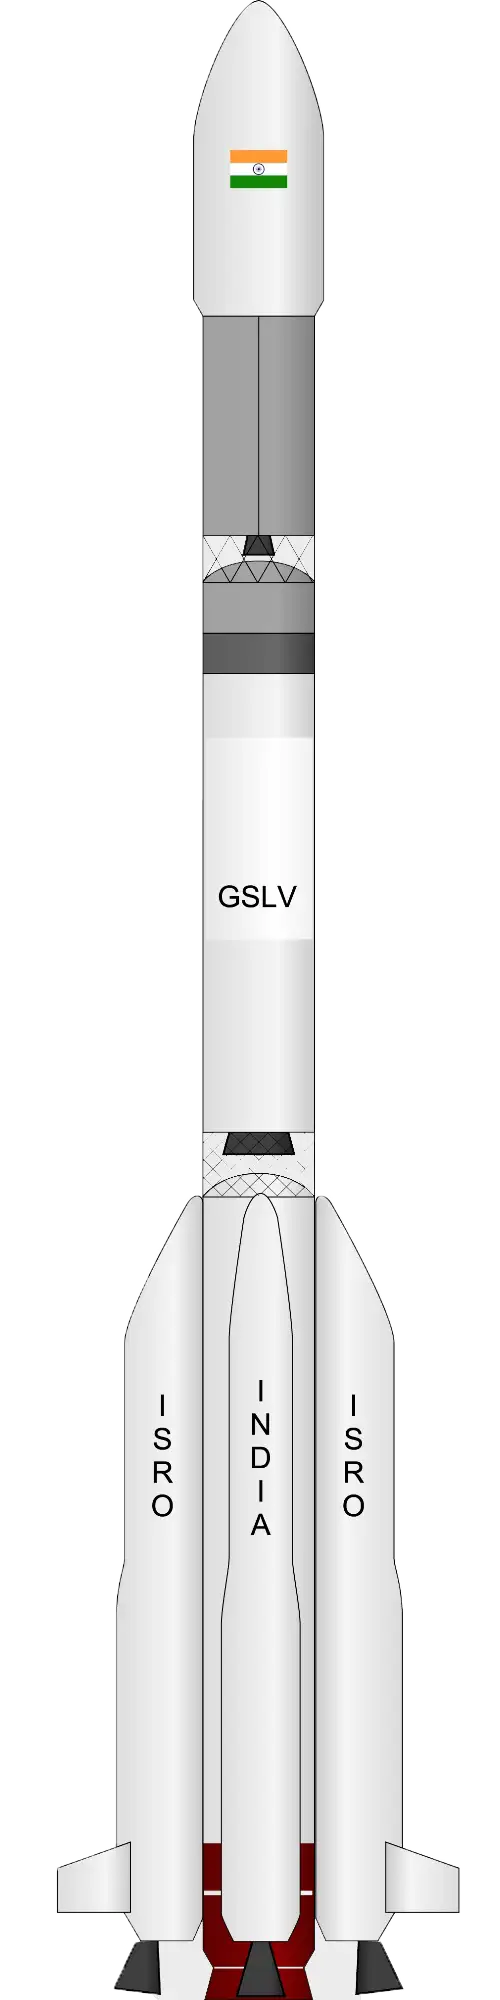 PSLV Launcher